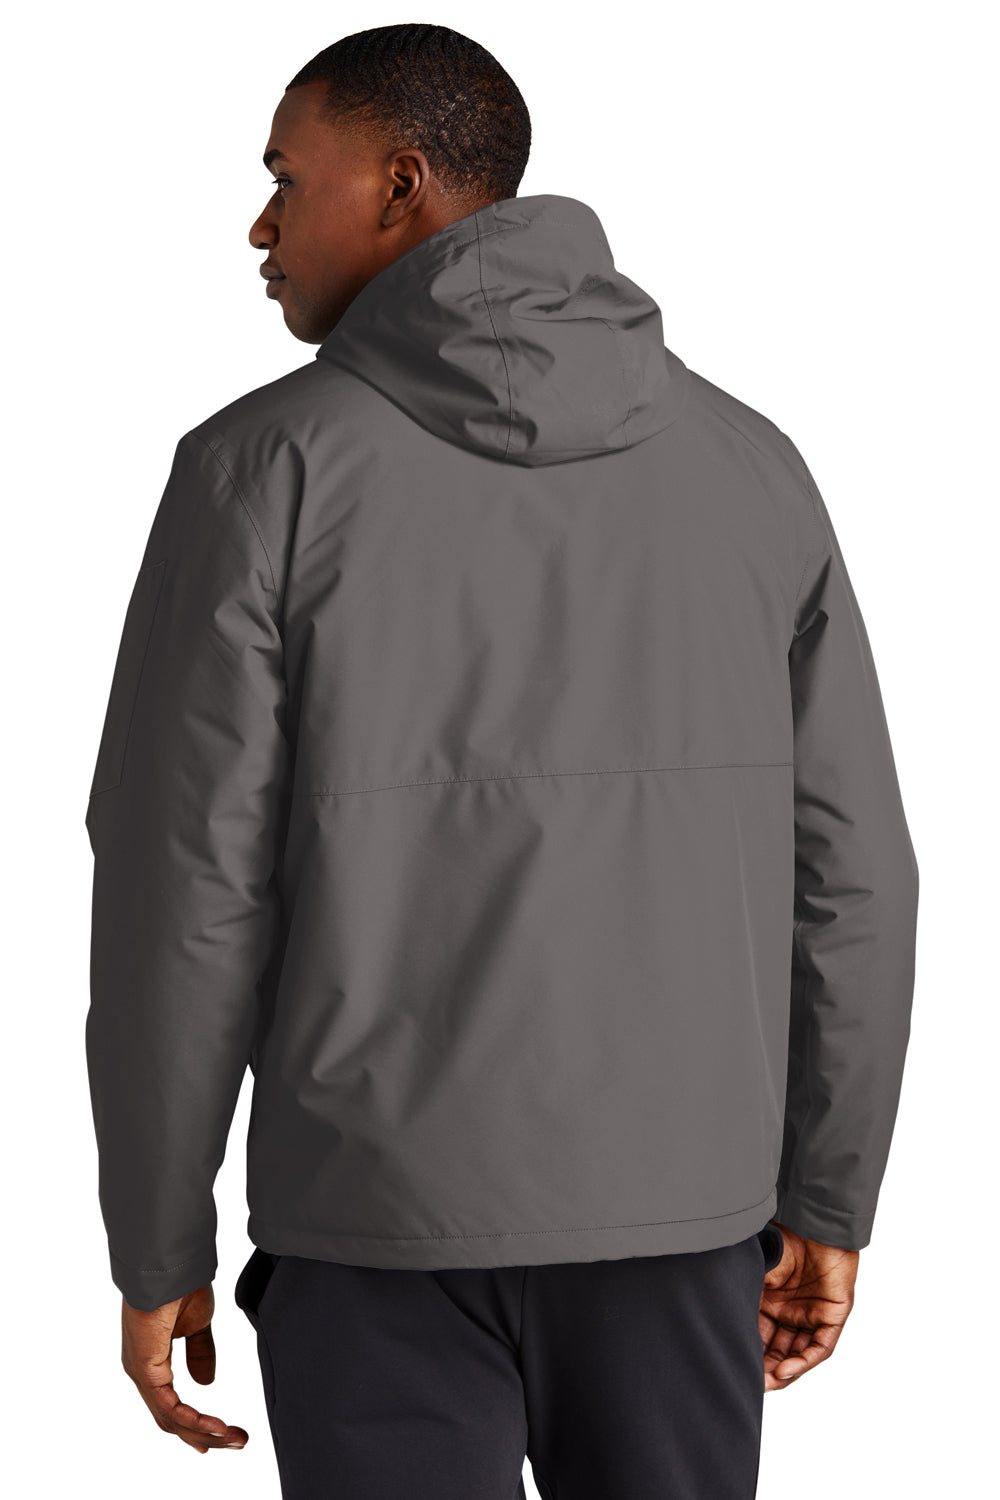 Sport-Tek JST56 Waterproof Insulated Full Zip Hooded Jacket Graphite Grey Back